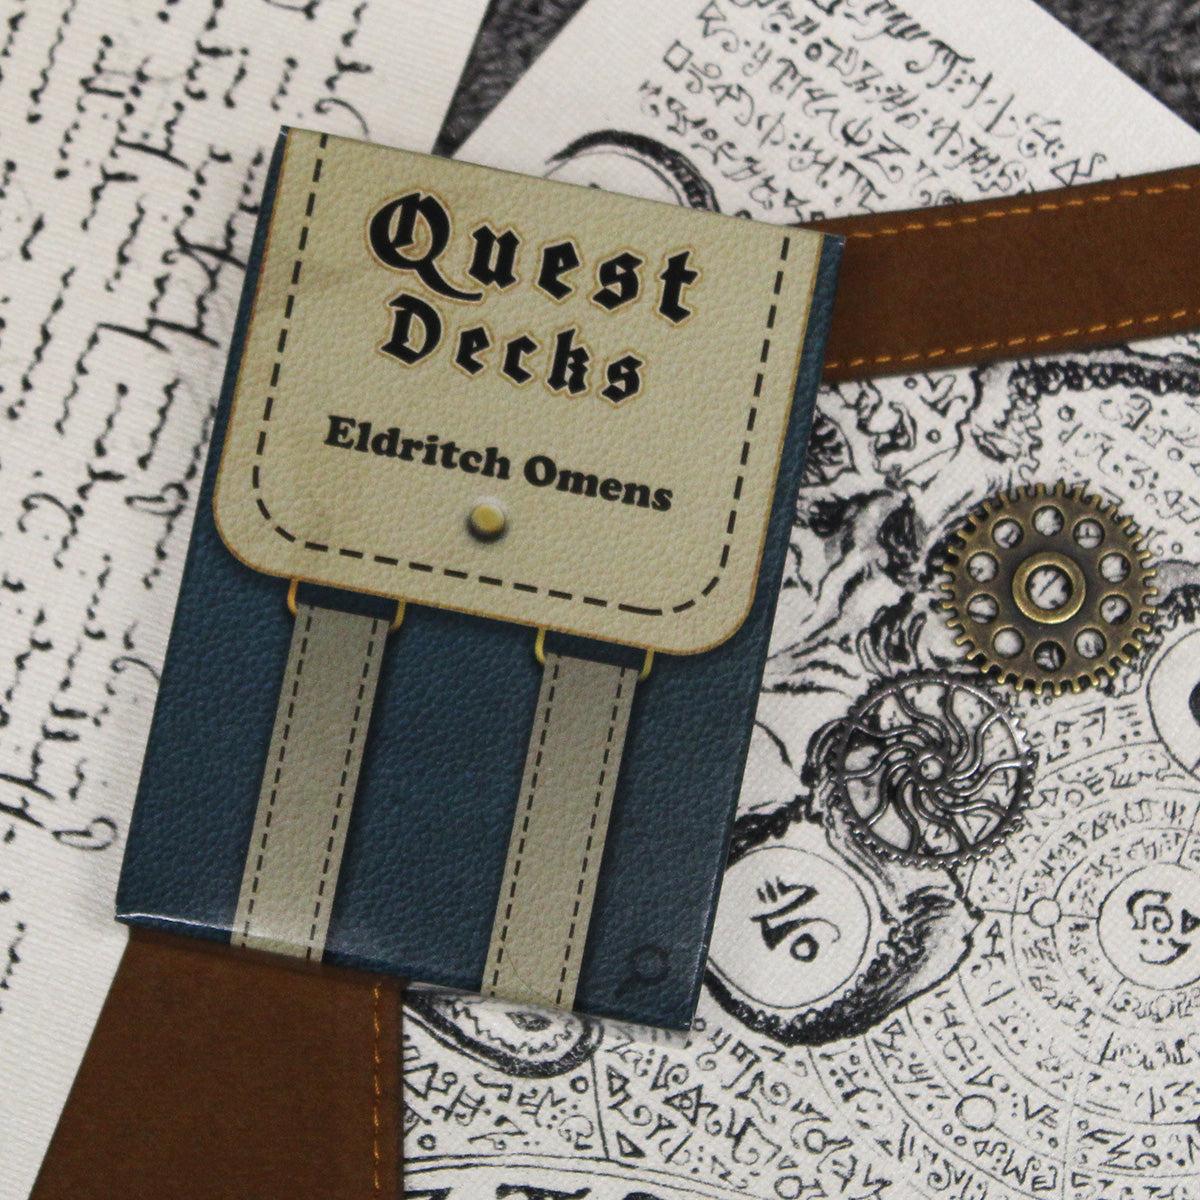 Quest Decks: Eldritch Omens